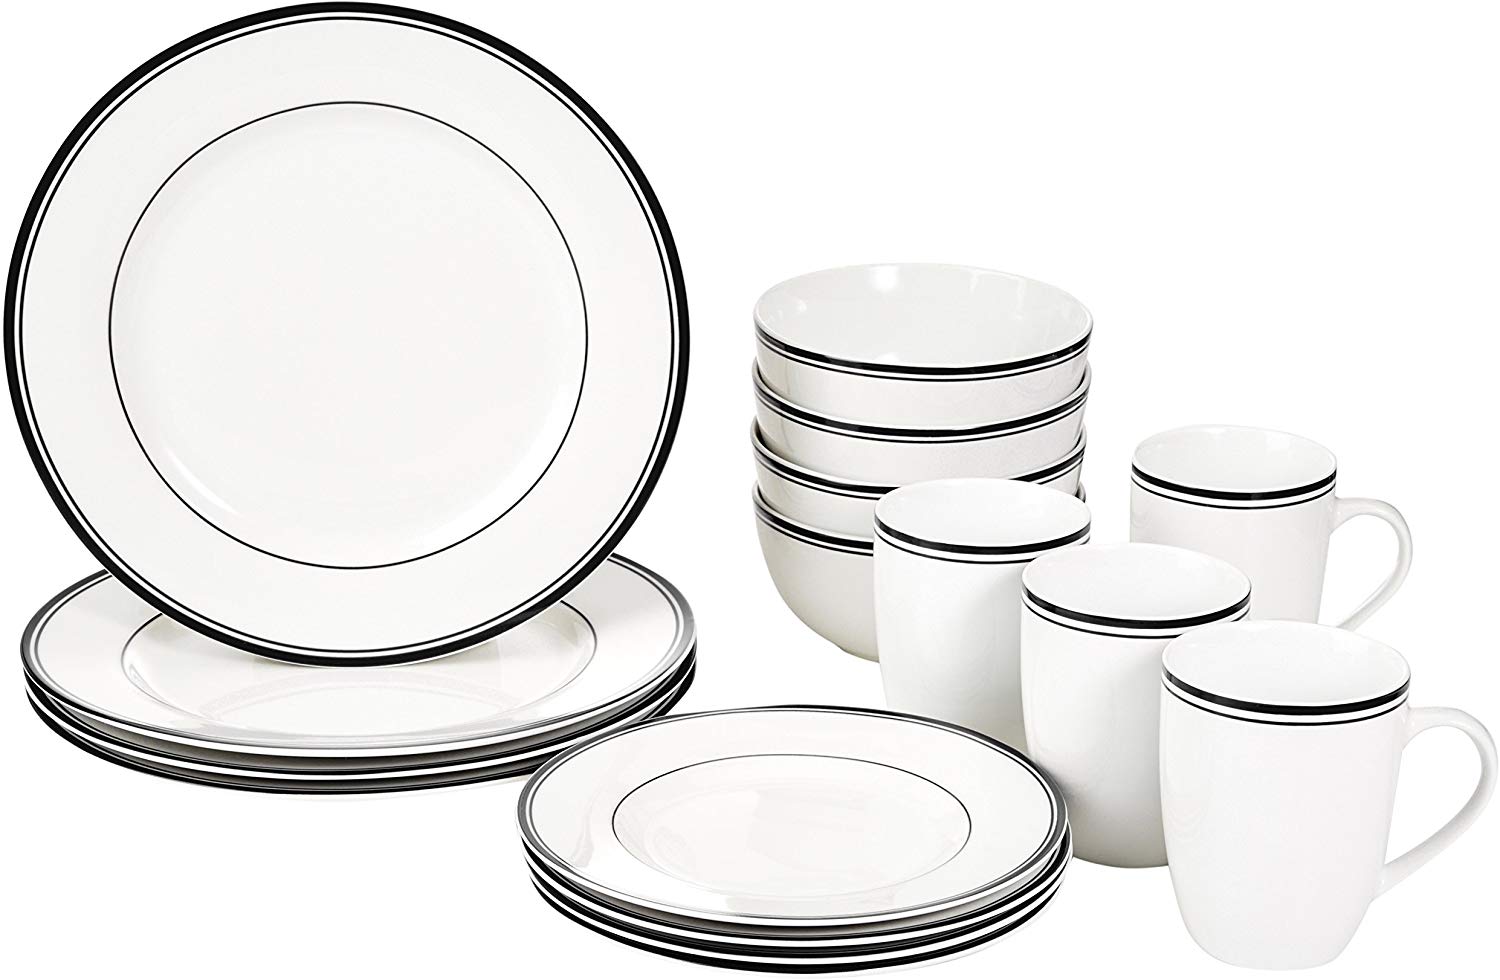 AmazonBasics Basics 16-Piece Cafe Stripe Dinnerware Set, Service for 4, Black